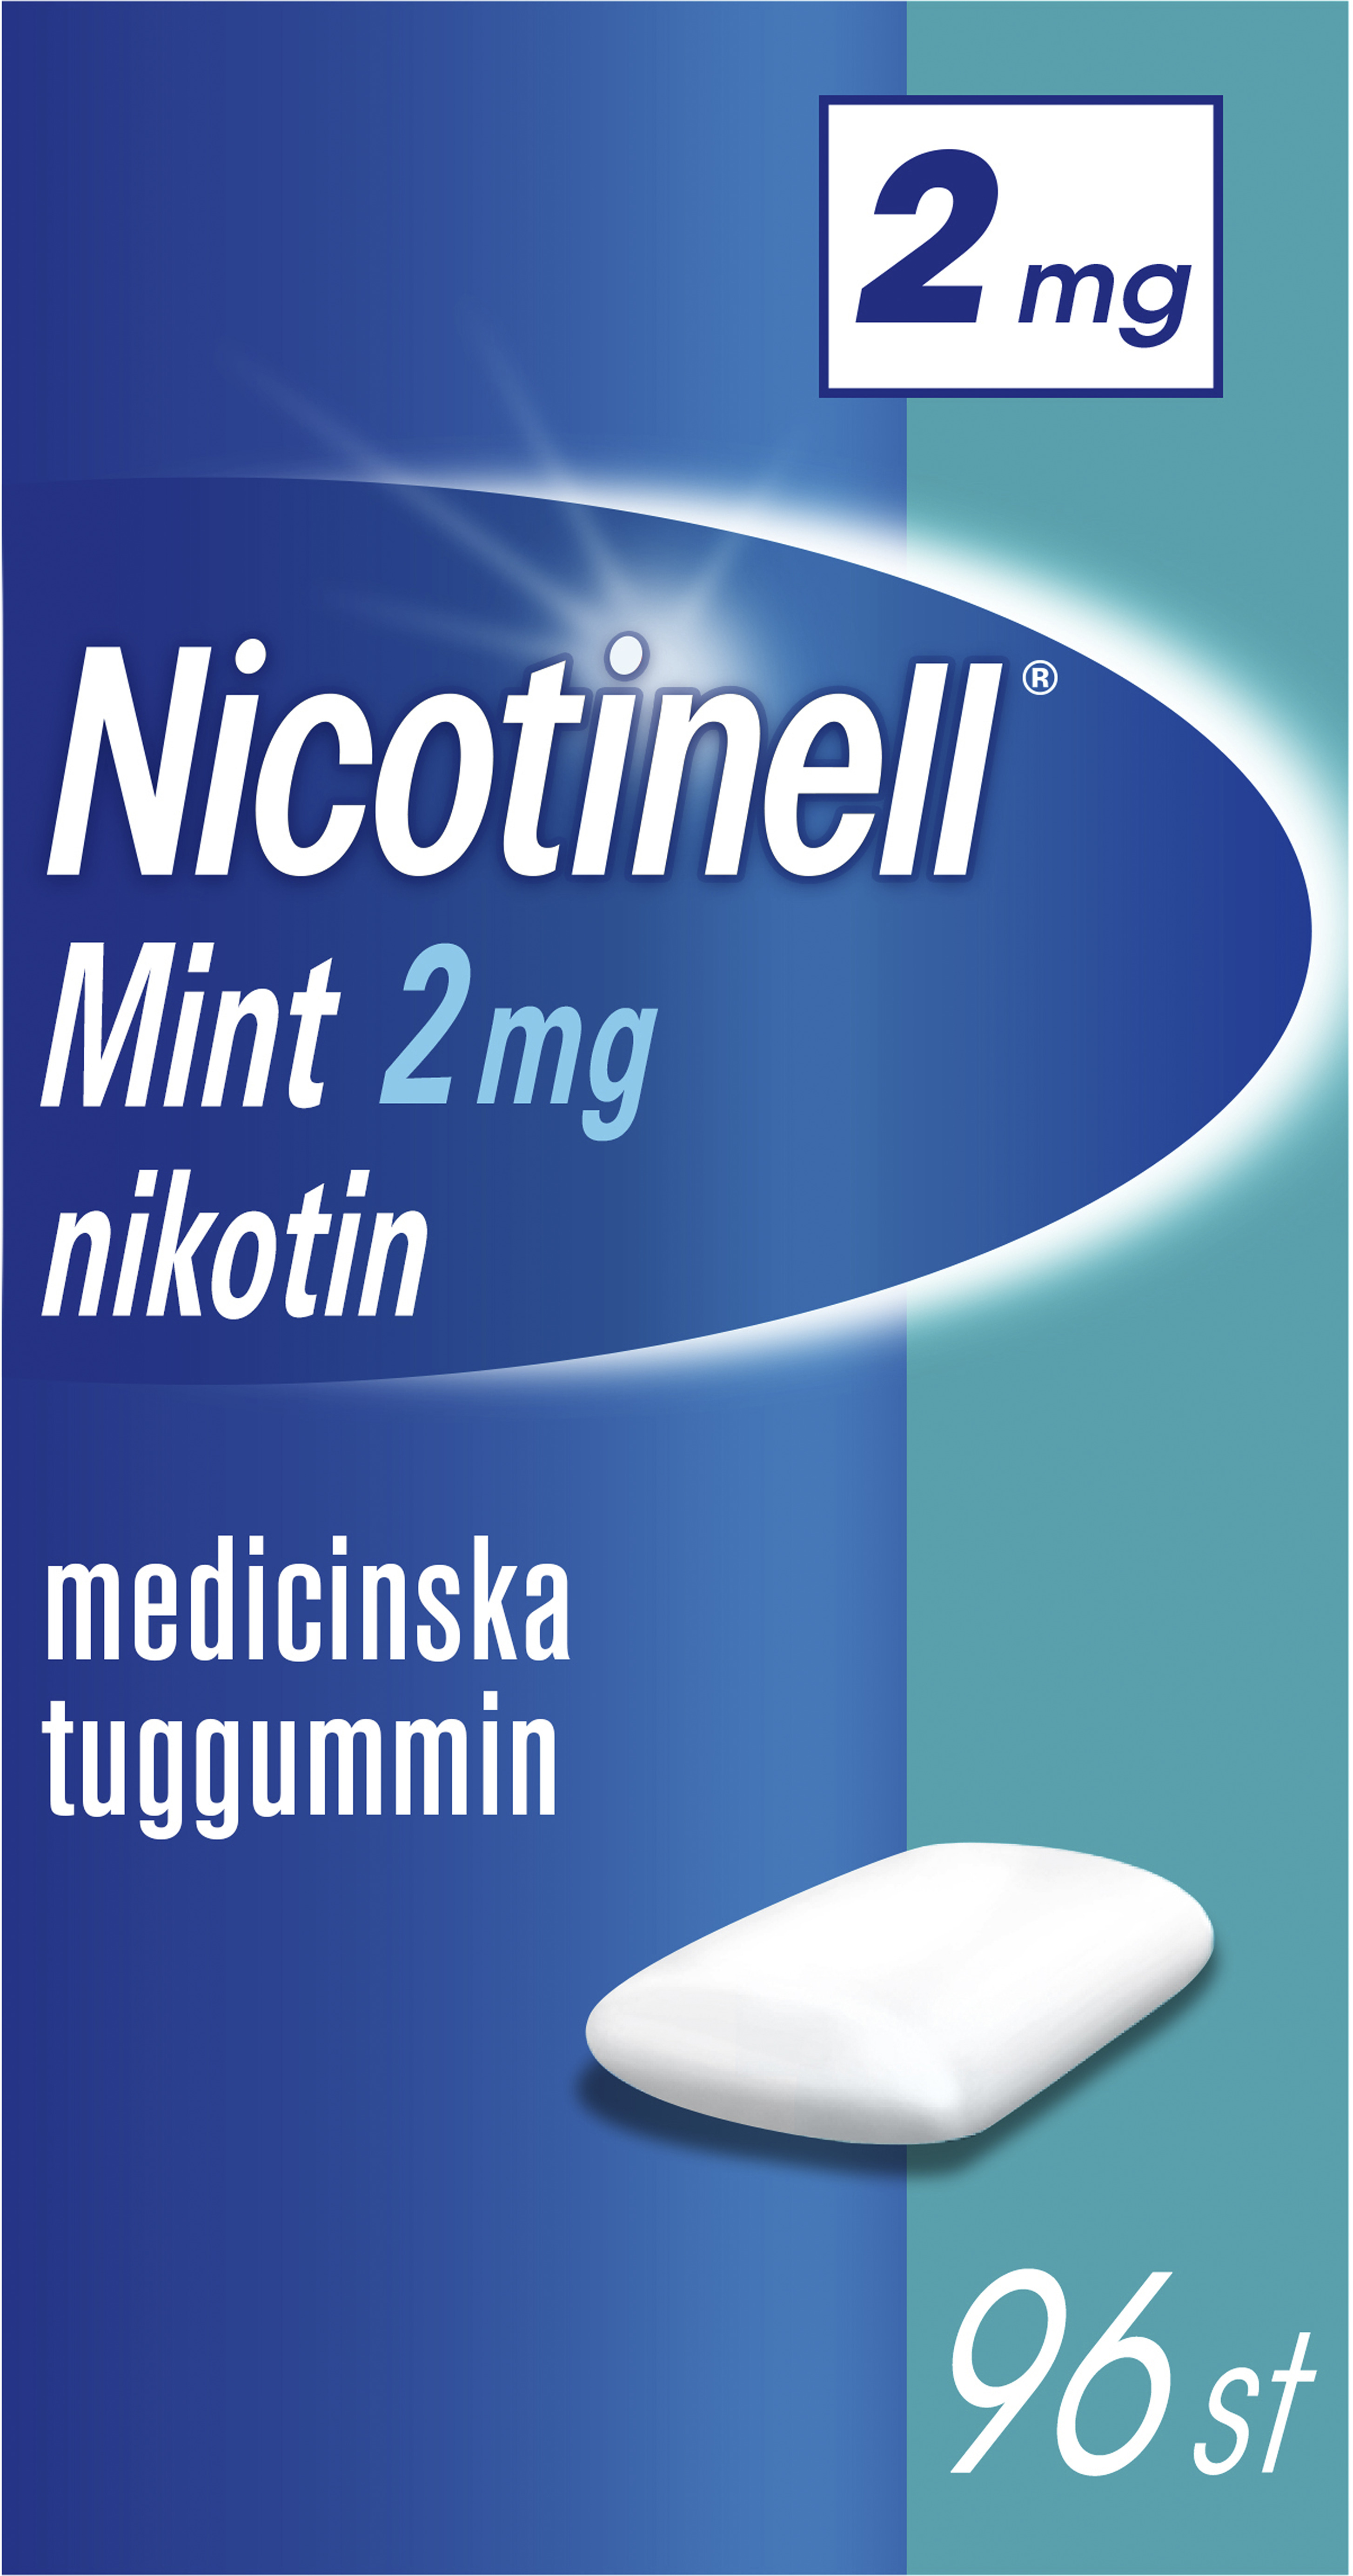 Nicotinell Mint 2 mg Nikotin Medicinska Tuggummin 96 st